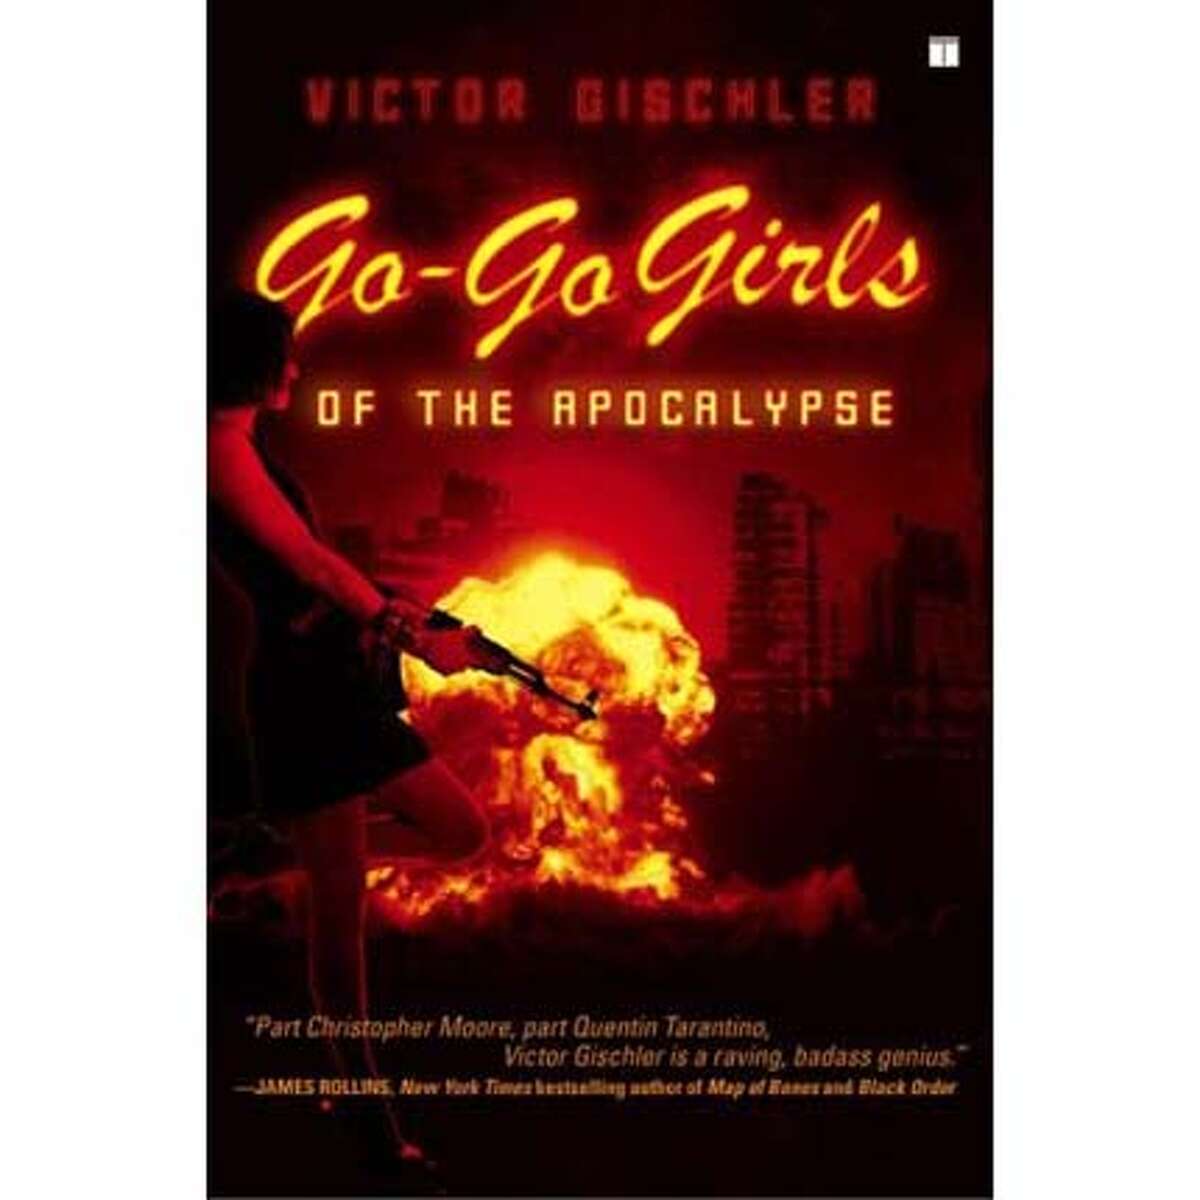 Go-Go Girls of the Apocalypse by Victor Gischler